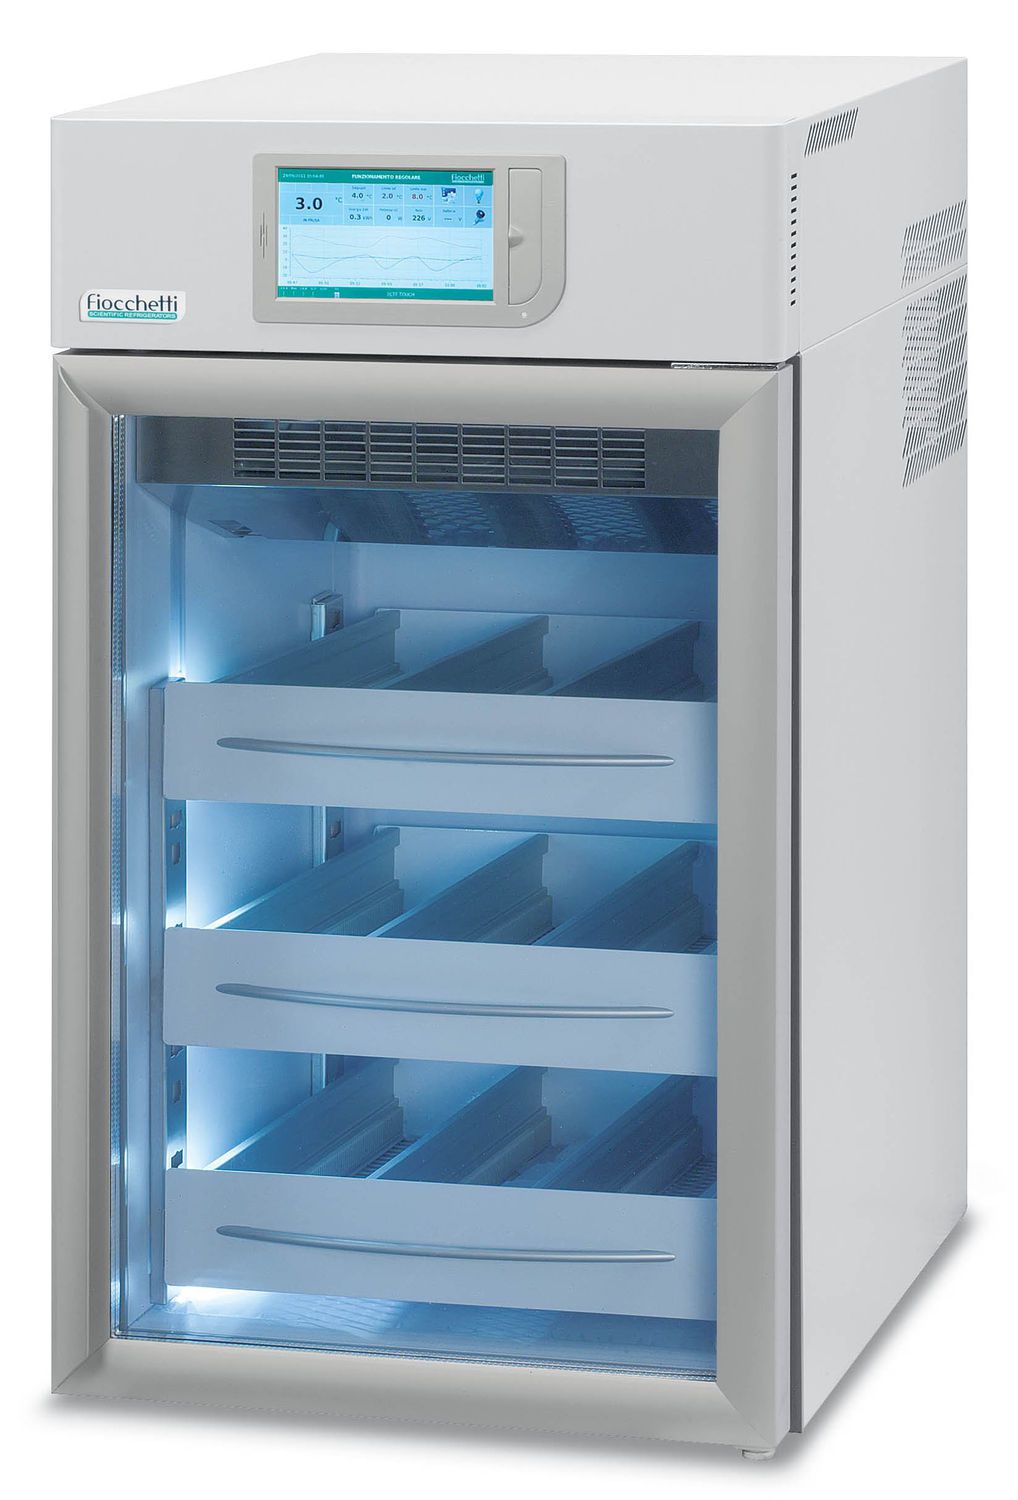 Blood bank refrigerator / built-in / 1-door 4 °C, 128 L | EMOTECA 140 C.F. di Ciro Fiocchetti & C. s.n.c.